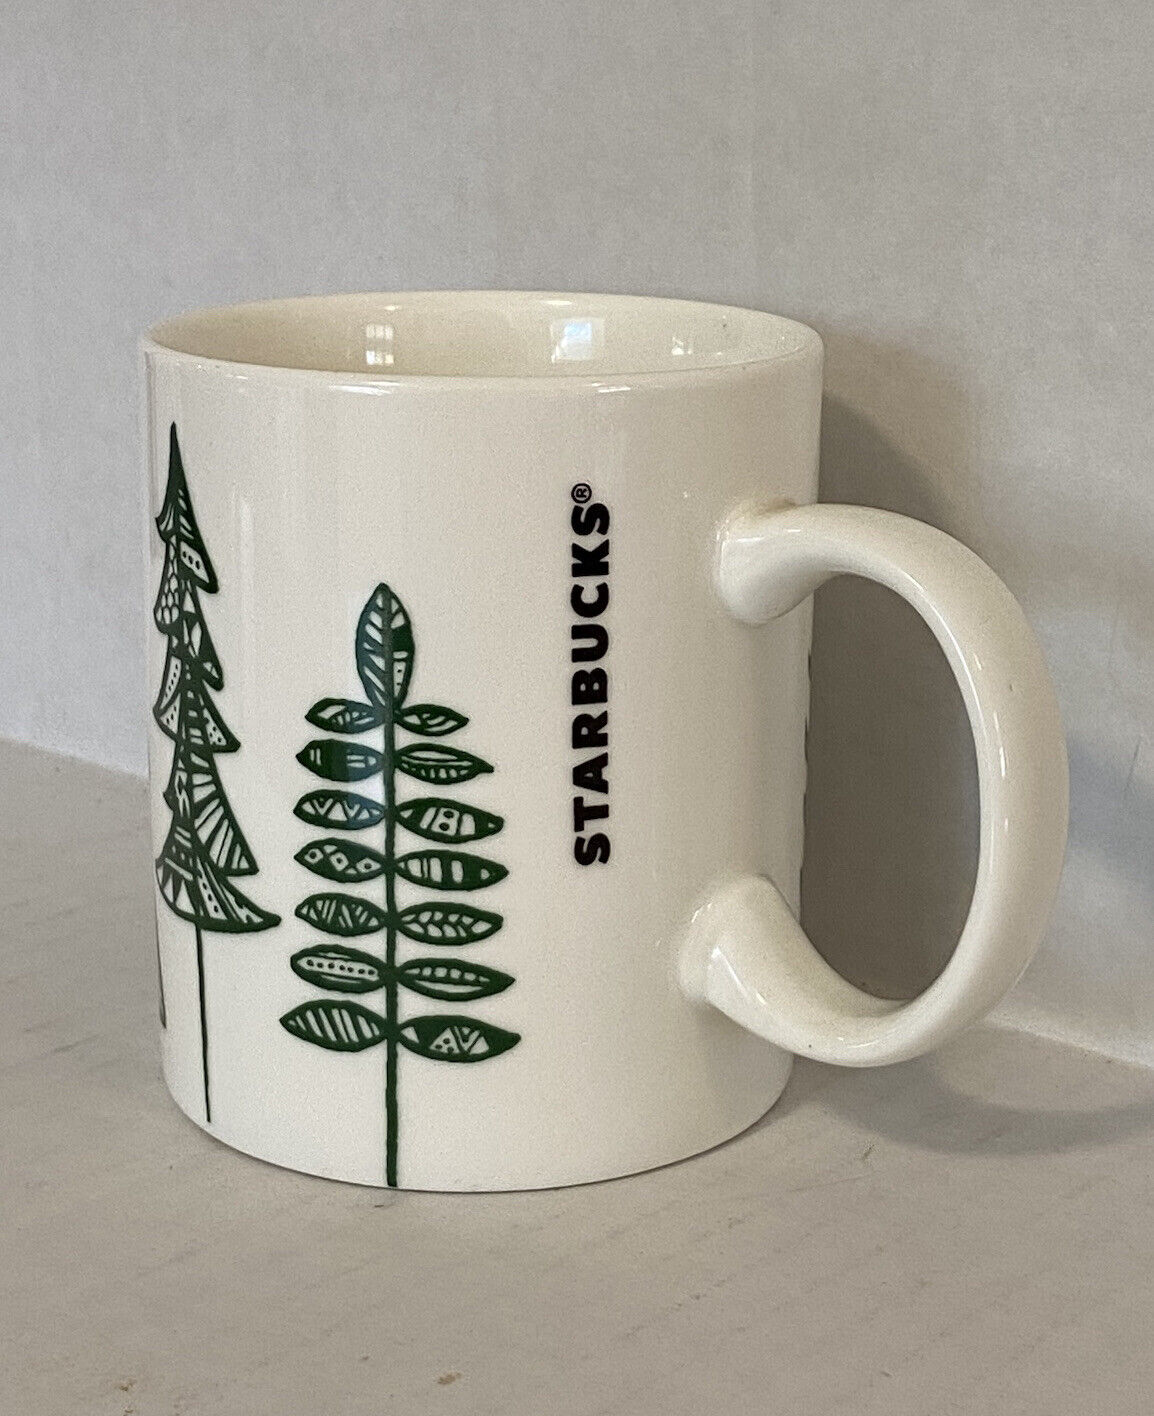 Starbucks Winter Season Coffee Mug 2015 White with Green Trees New Cup